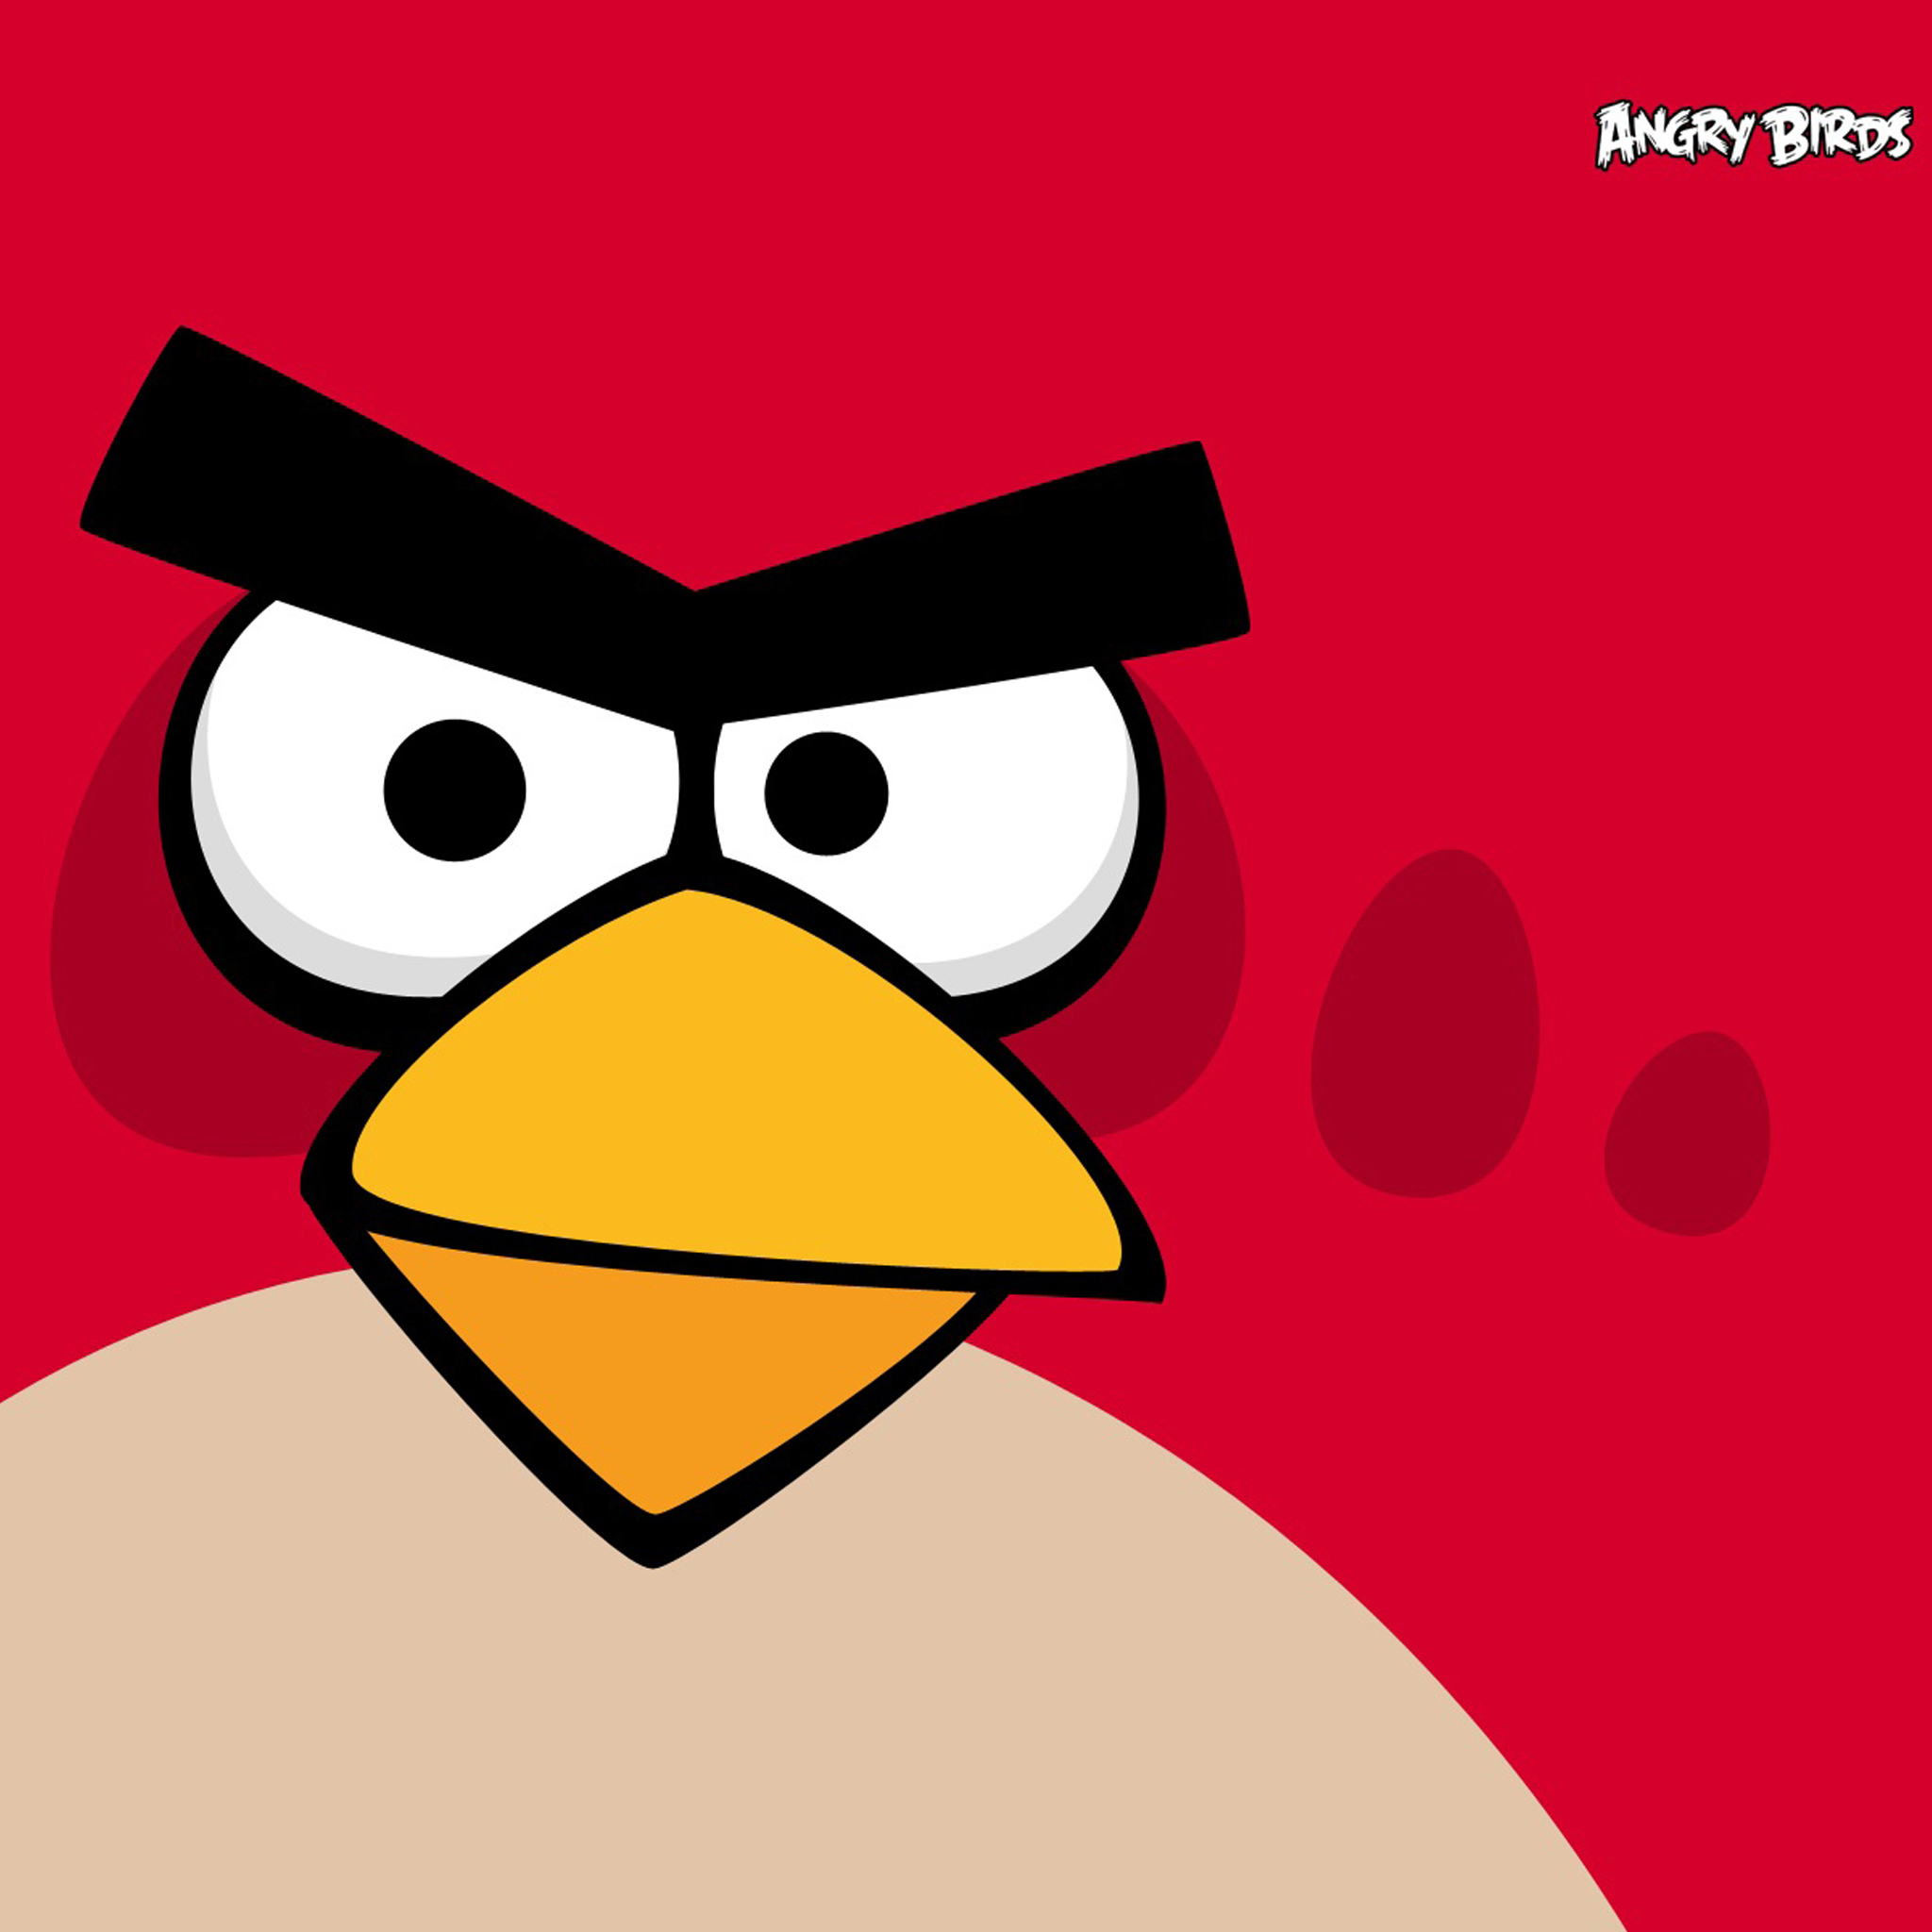 ipad wallpaper hd,angry birds,rosso,cartone animato,uccello,clipart